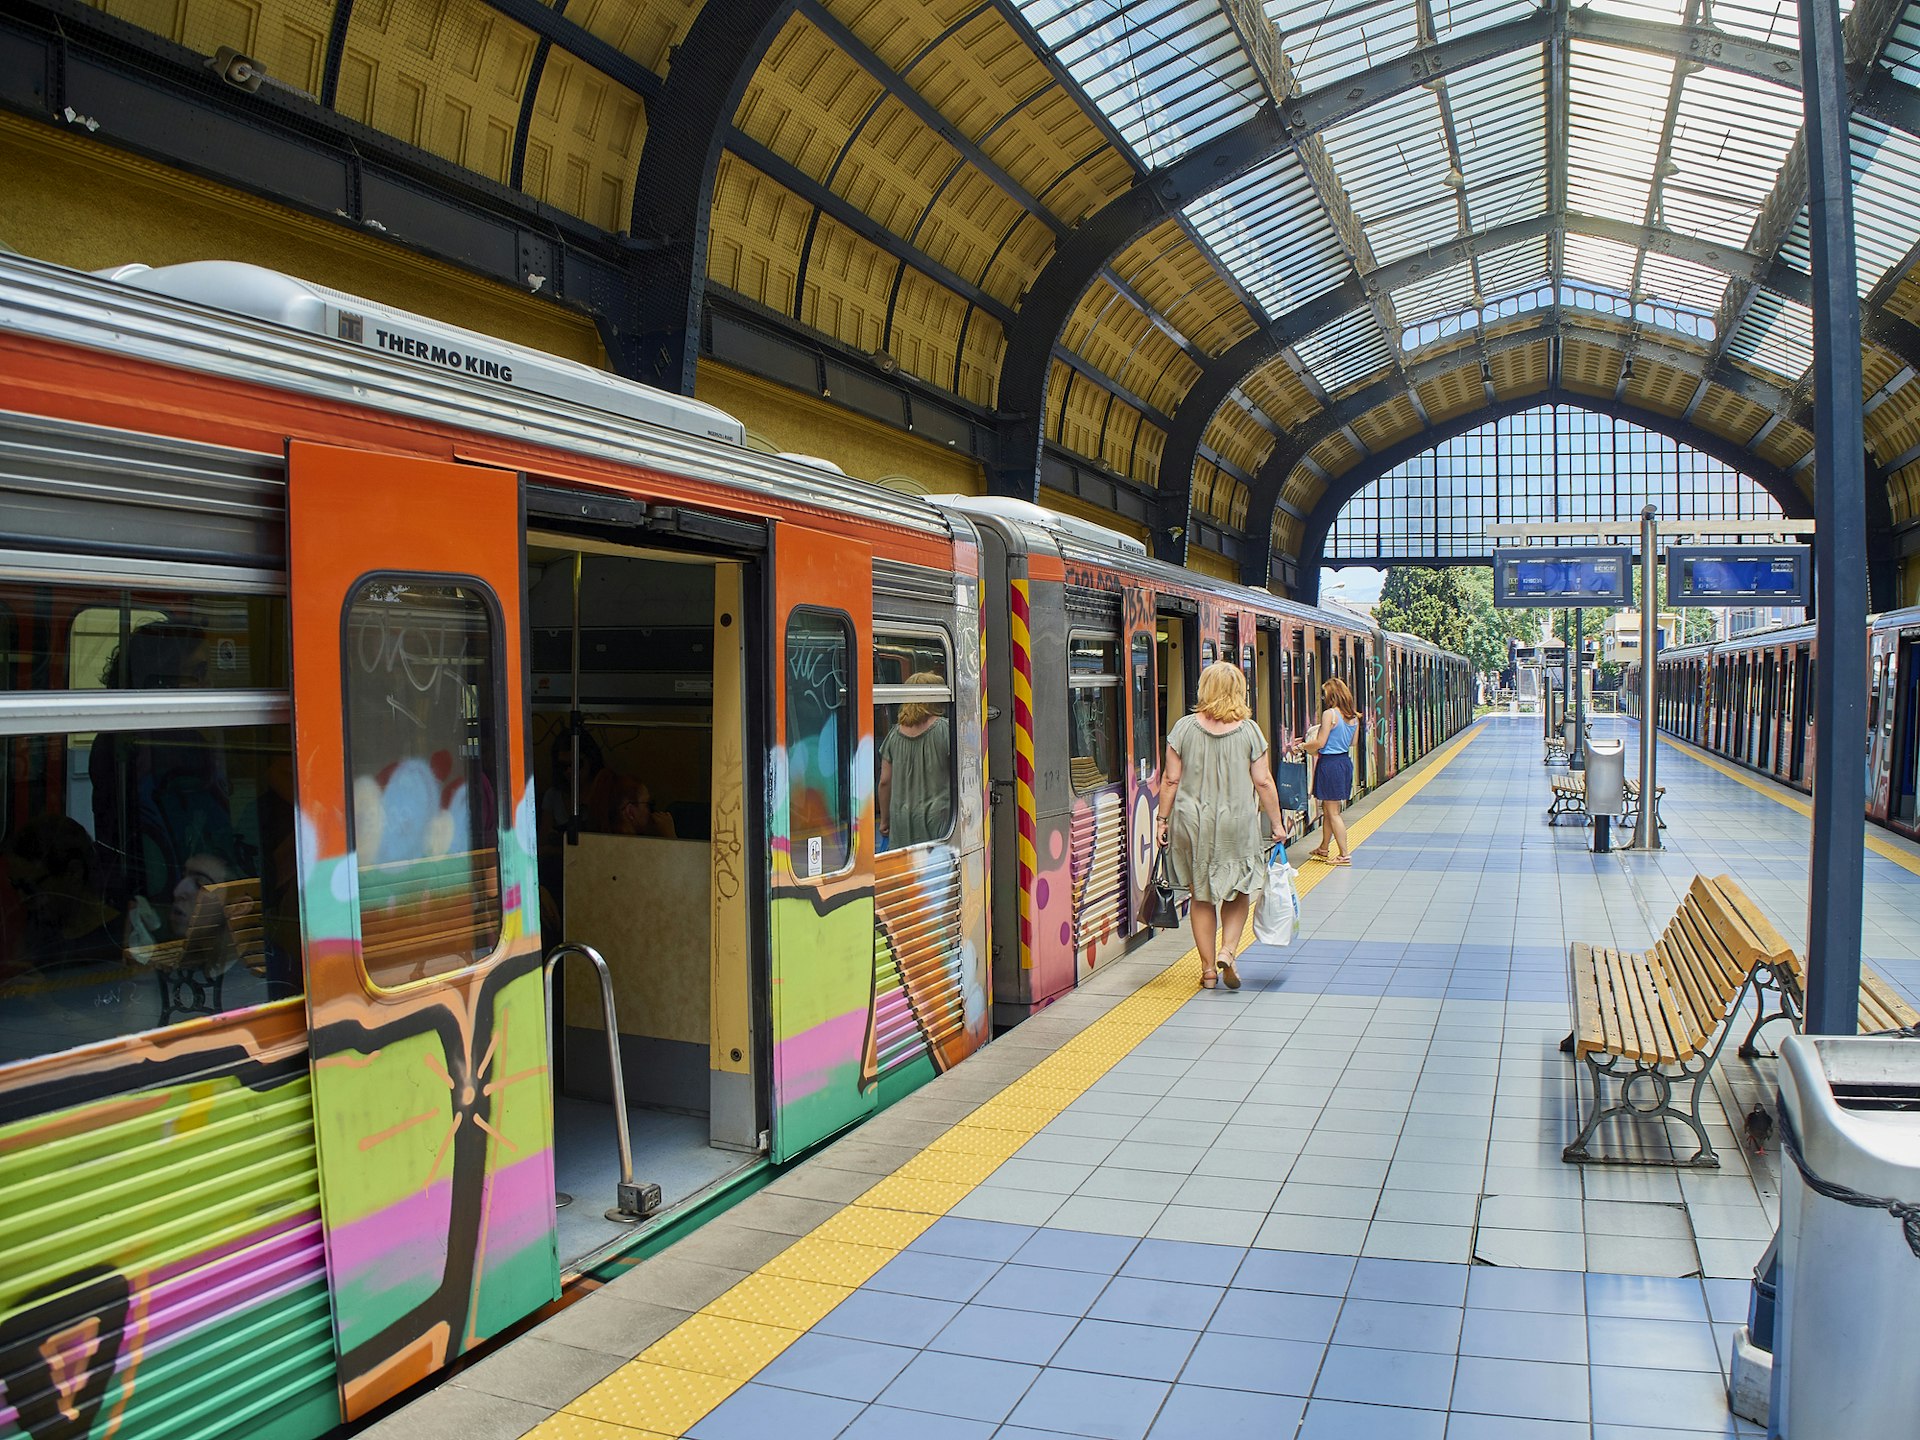 A colorful train waiting at the platform in Piraeus Metro station. Athens